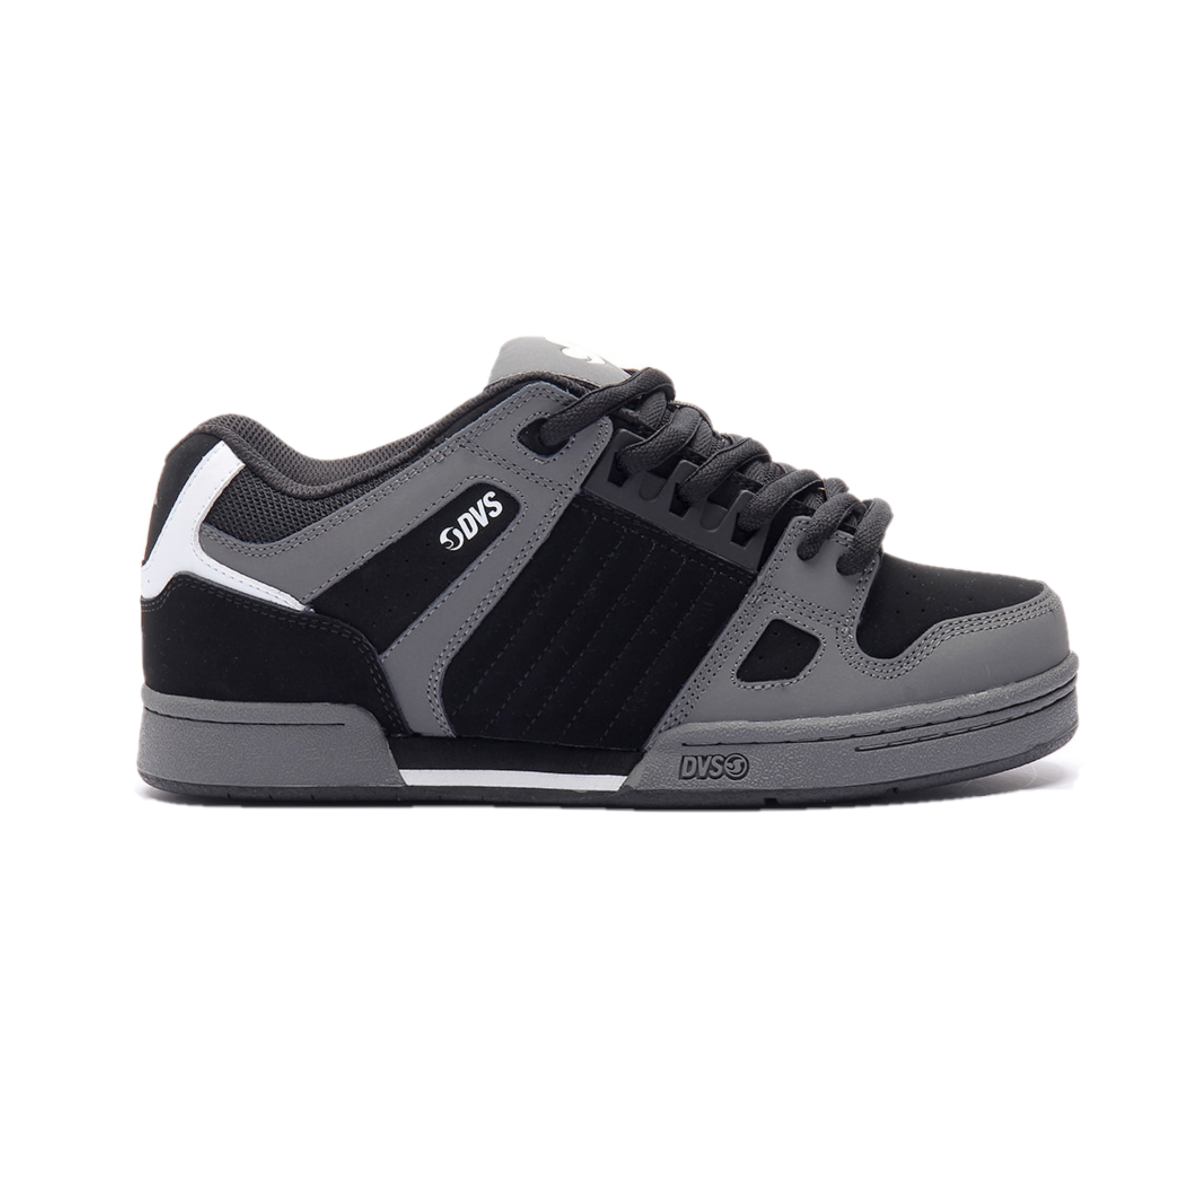 DVS F0000233037 CELSIUS MN'S (Medium) Charcoal/Black/White Suede, Leather & Nubuck Skate Shoes